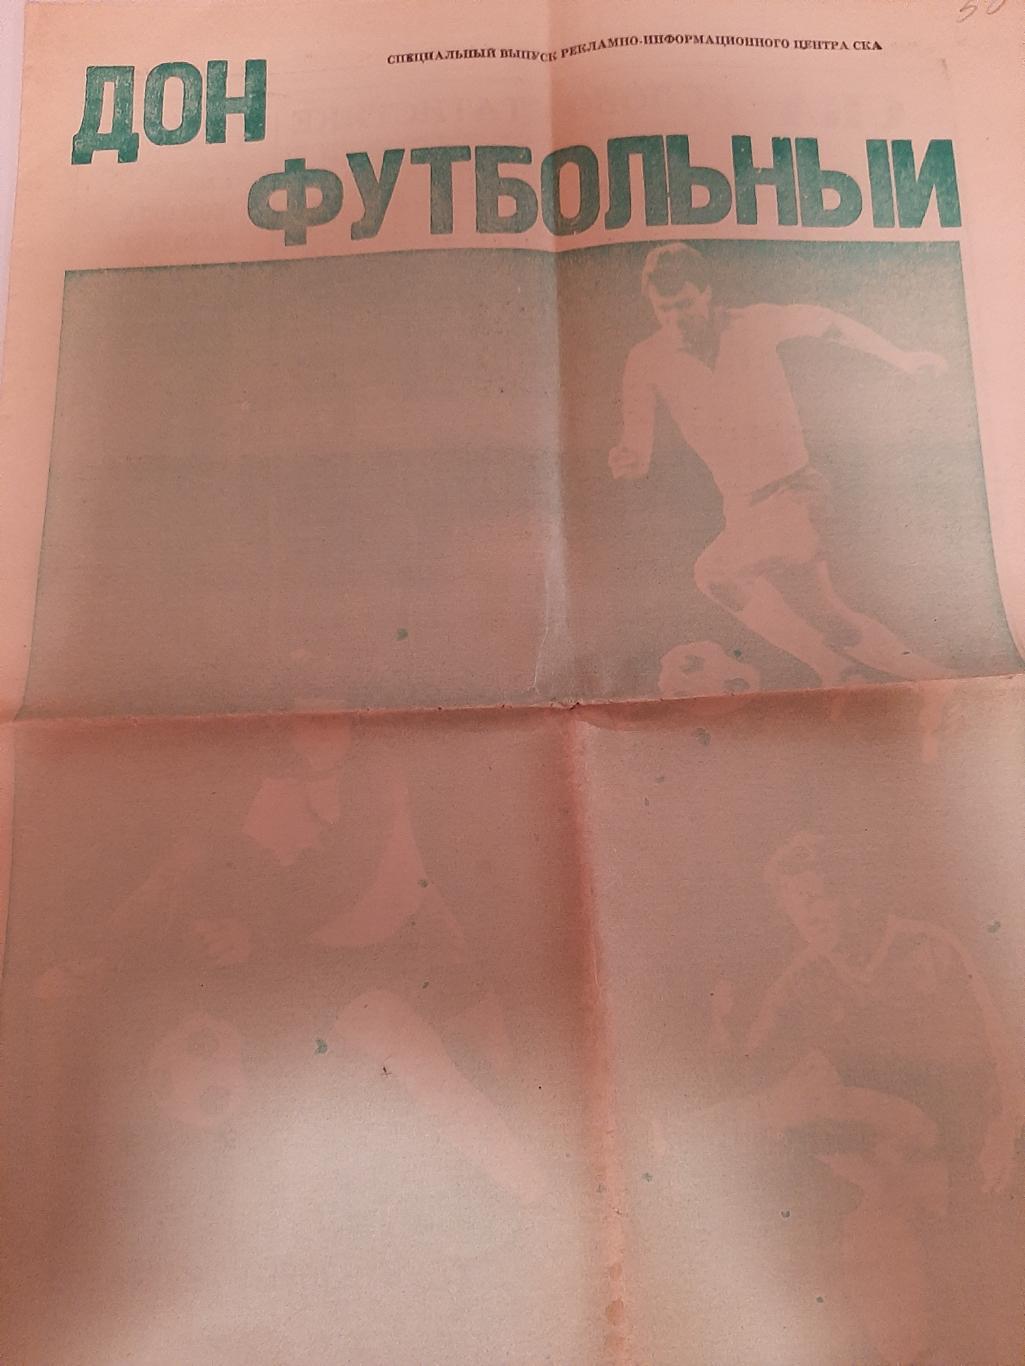 Дон футбольный спецвыпуск центра СКА 1989